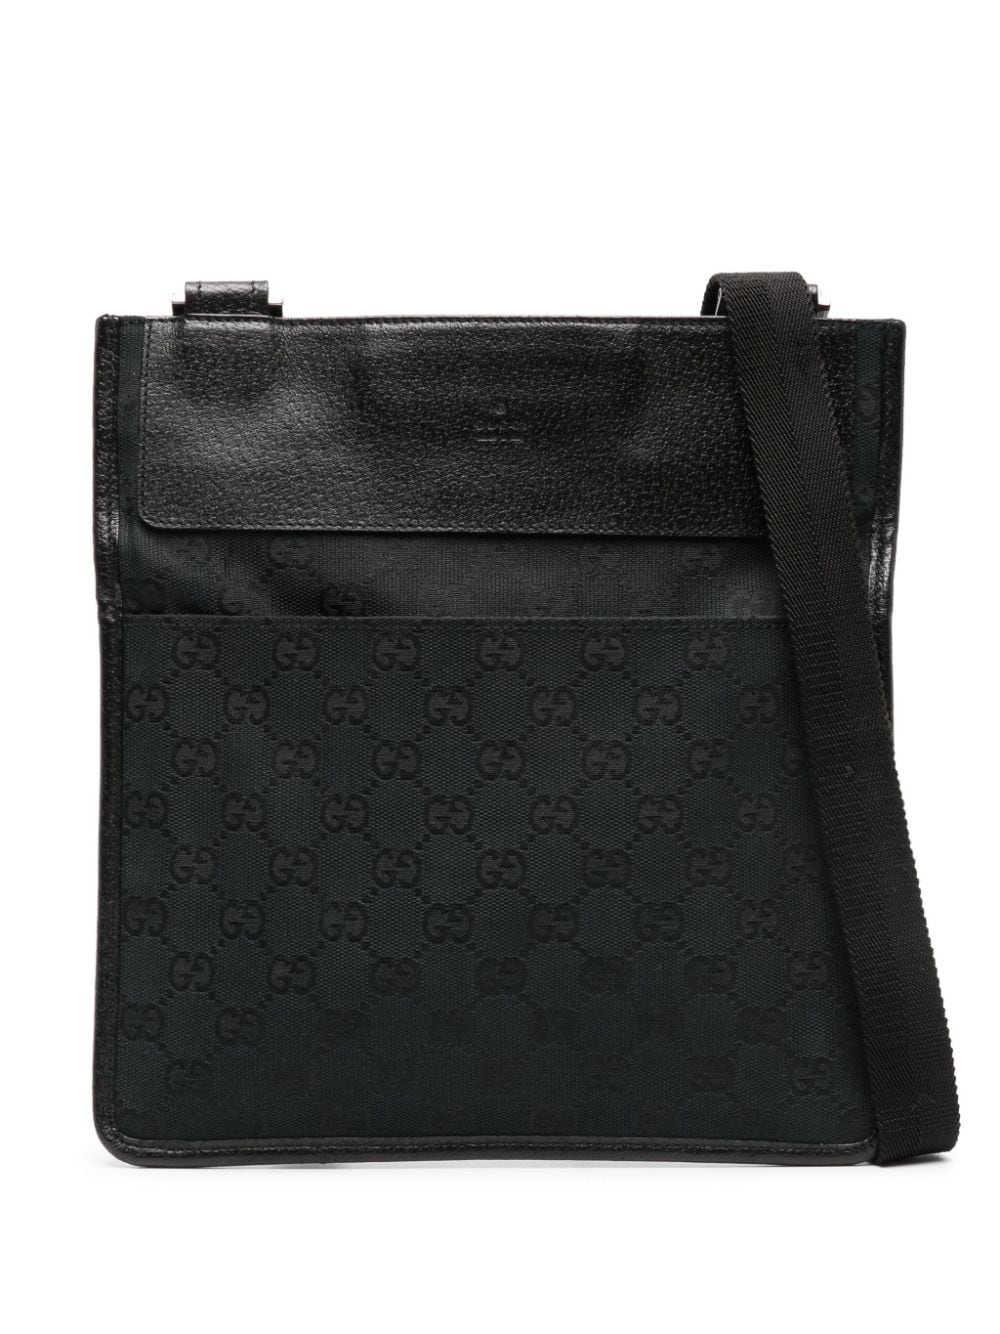 Pre-owned Gucci 2010s Gg Supreme Messenger Bag In Black